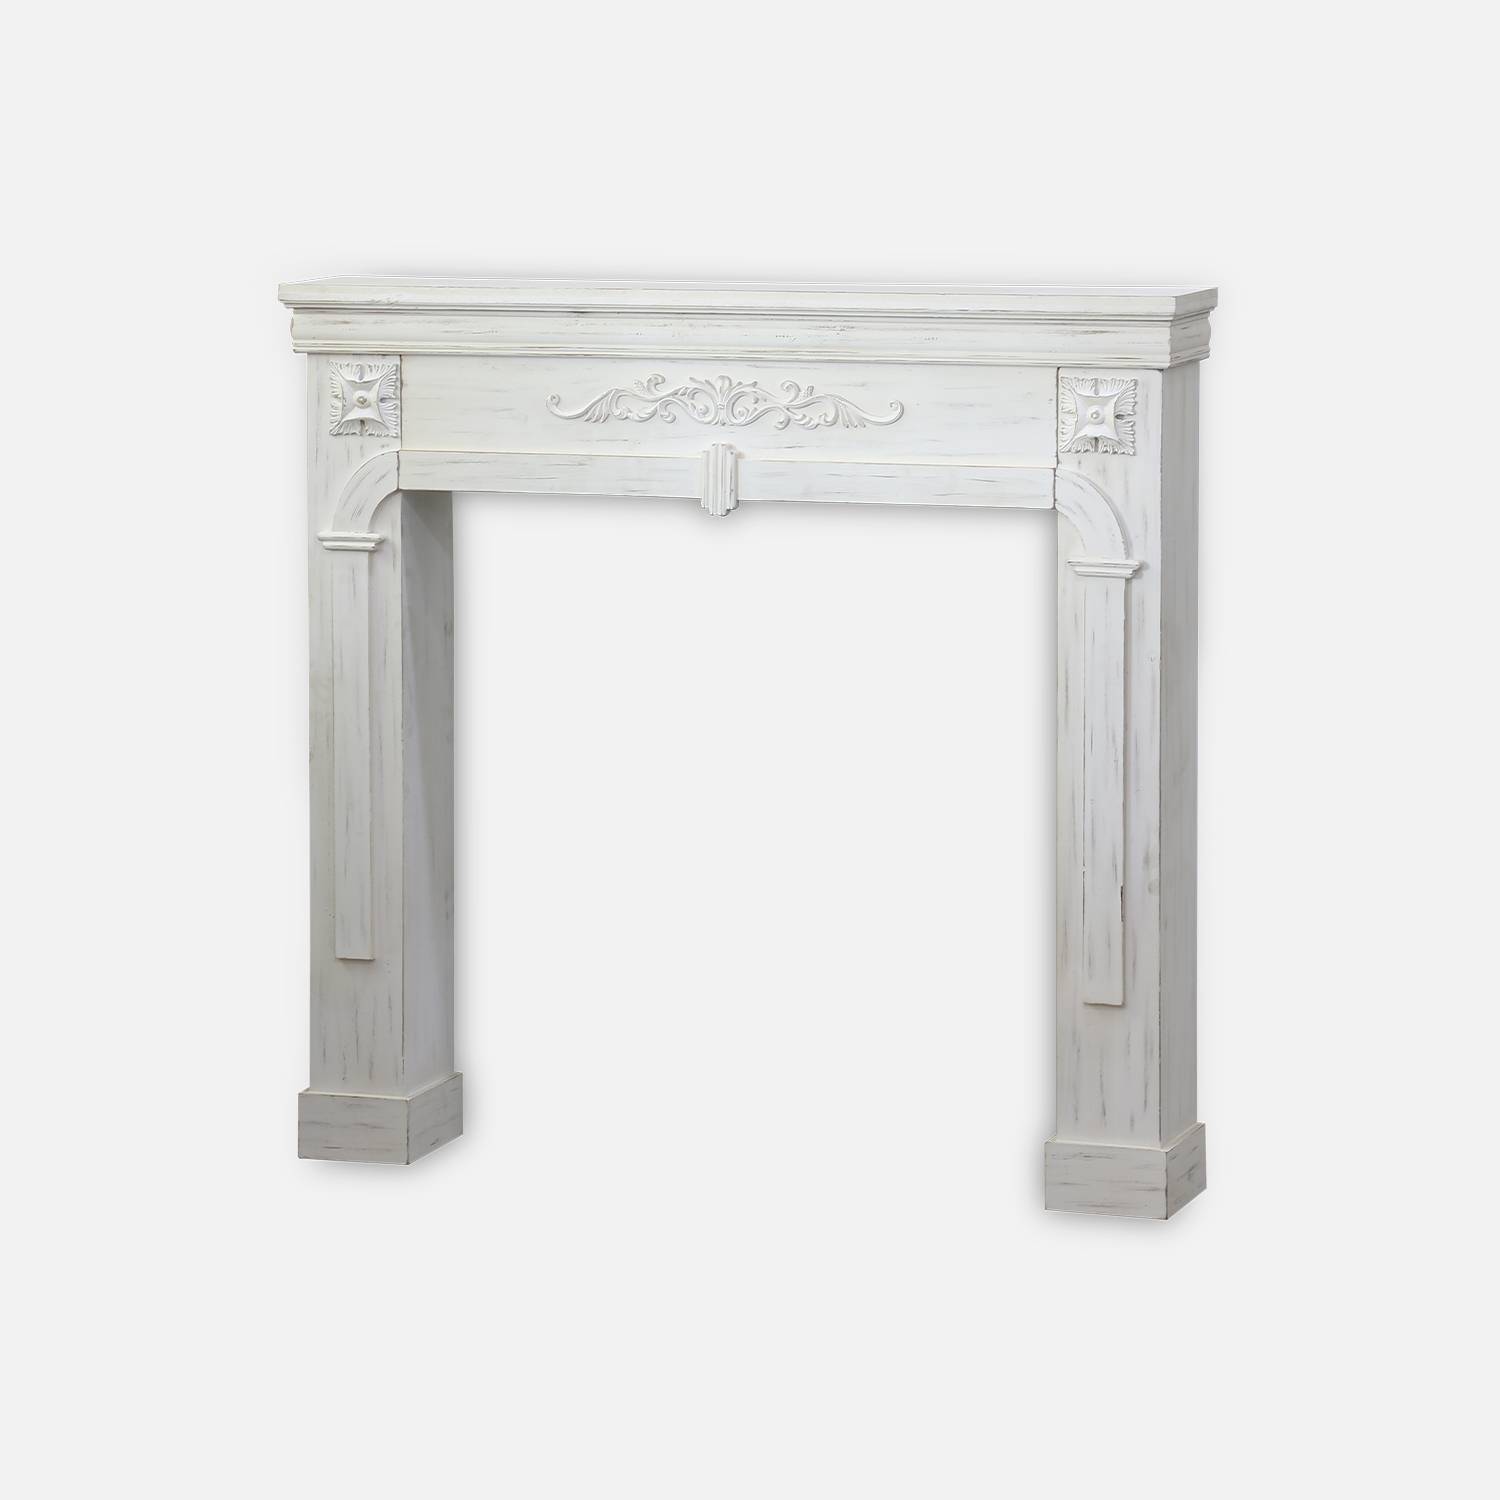 Decorative fireplace surround, MDF with firwood veneer, 104x17x100cm - Romance - Vintage White,sweeek,Photo3